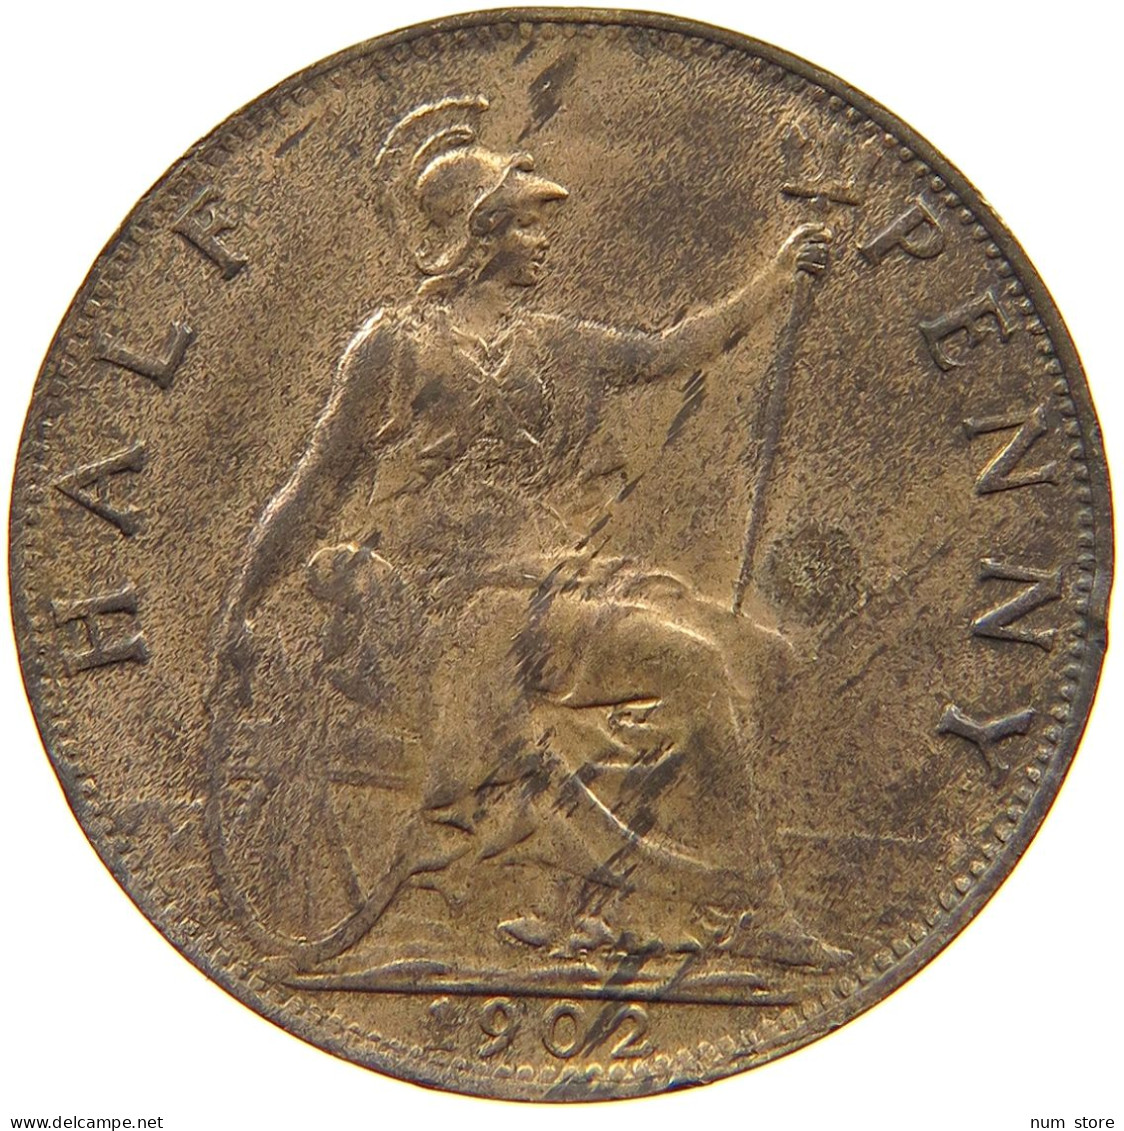 GREAT BRITAIN HALF PENNY 1902 Edward VII., 1901 - 1910 #t073 0323 - C. 1/2 Penny